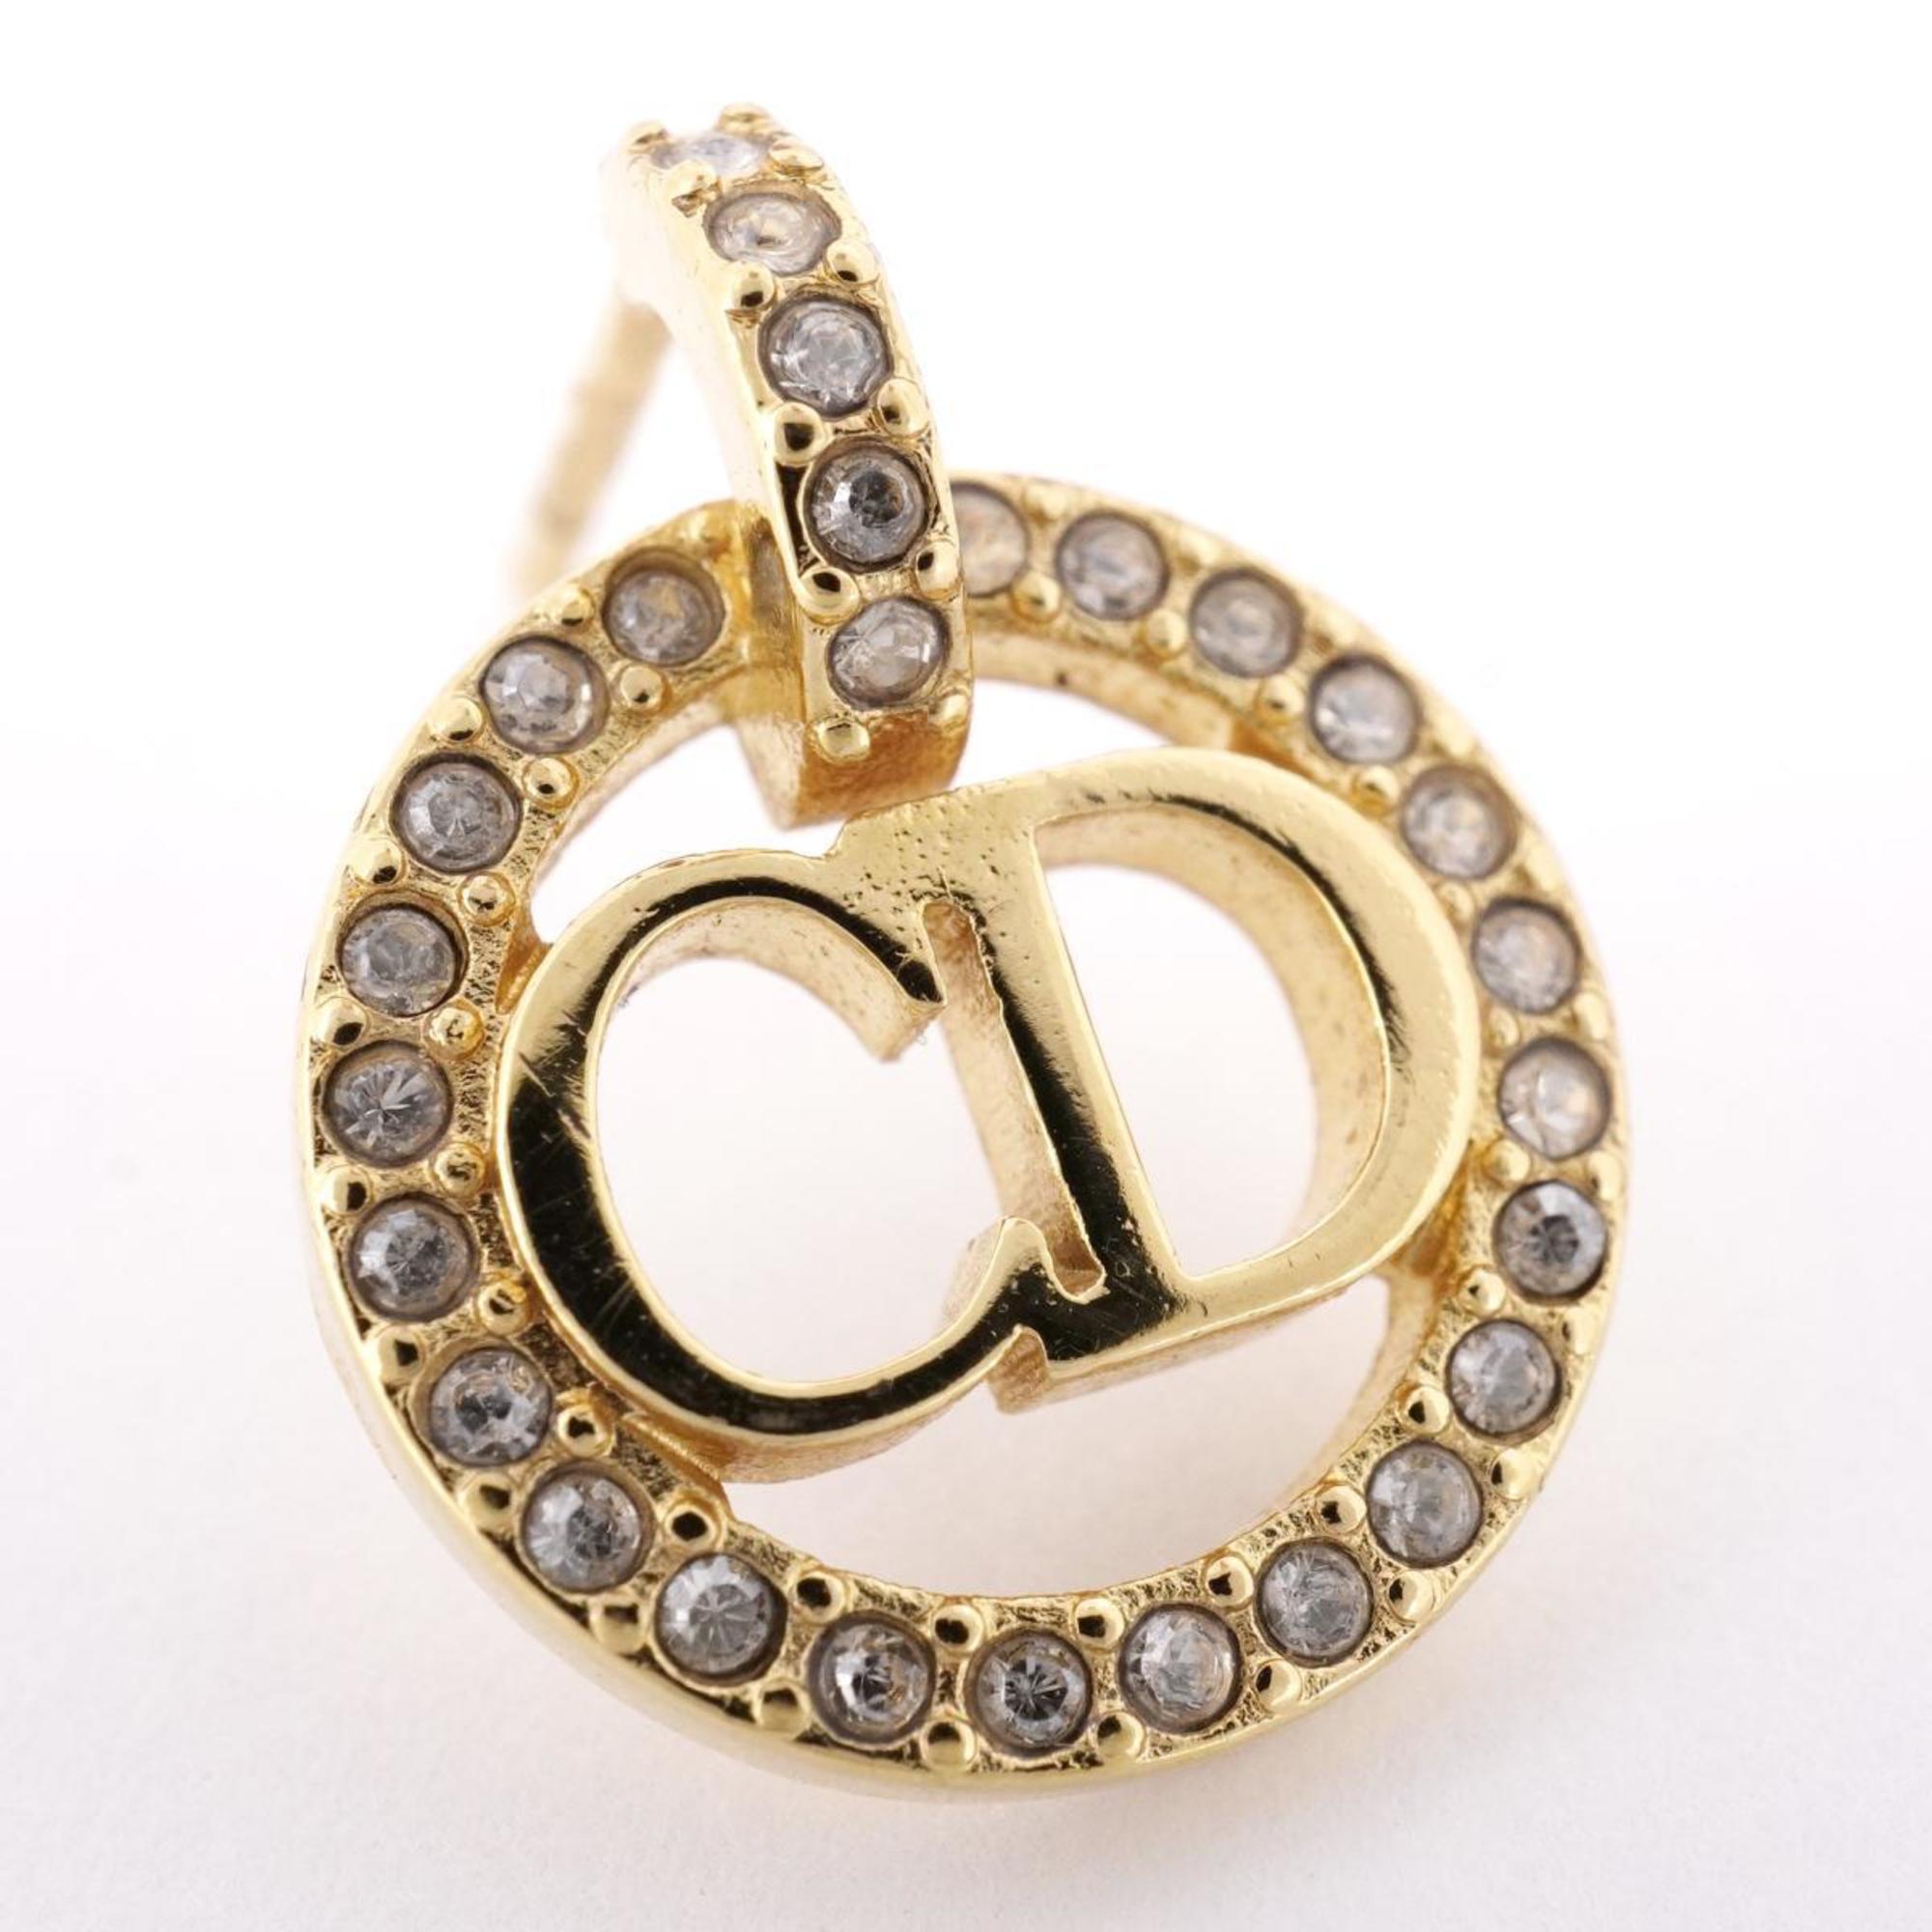 Christian Dior Earrings CD Circle Rhinestone GP Plated Gold Women's